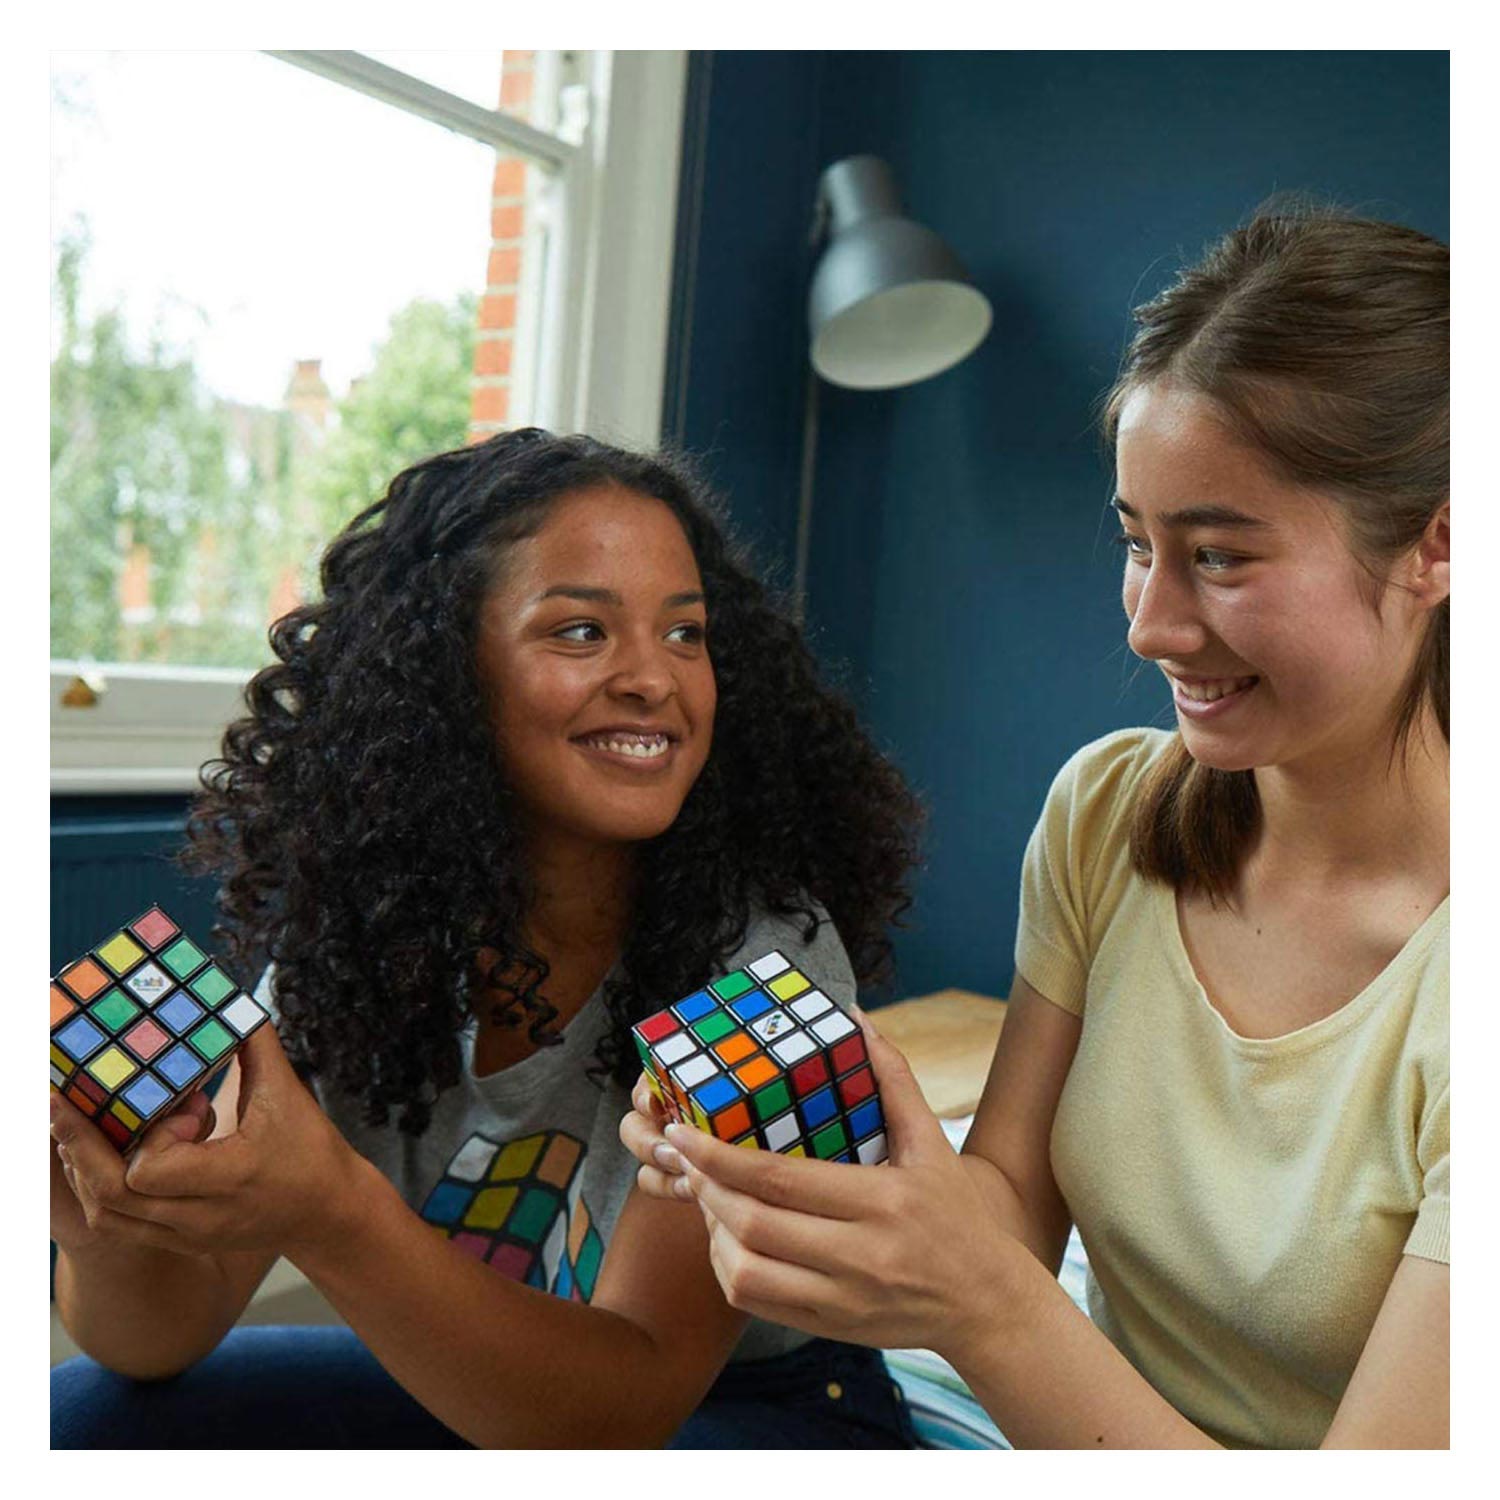 Rubik's Cube - 4x4